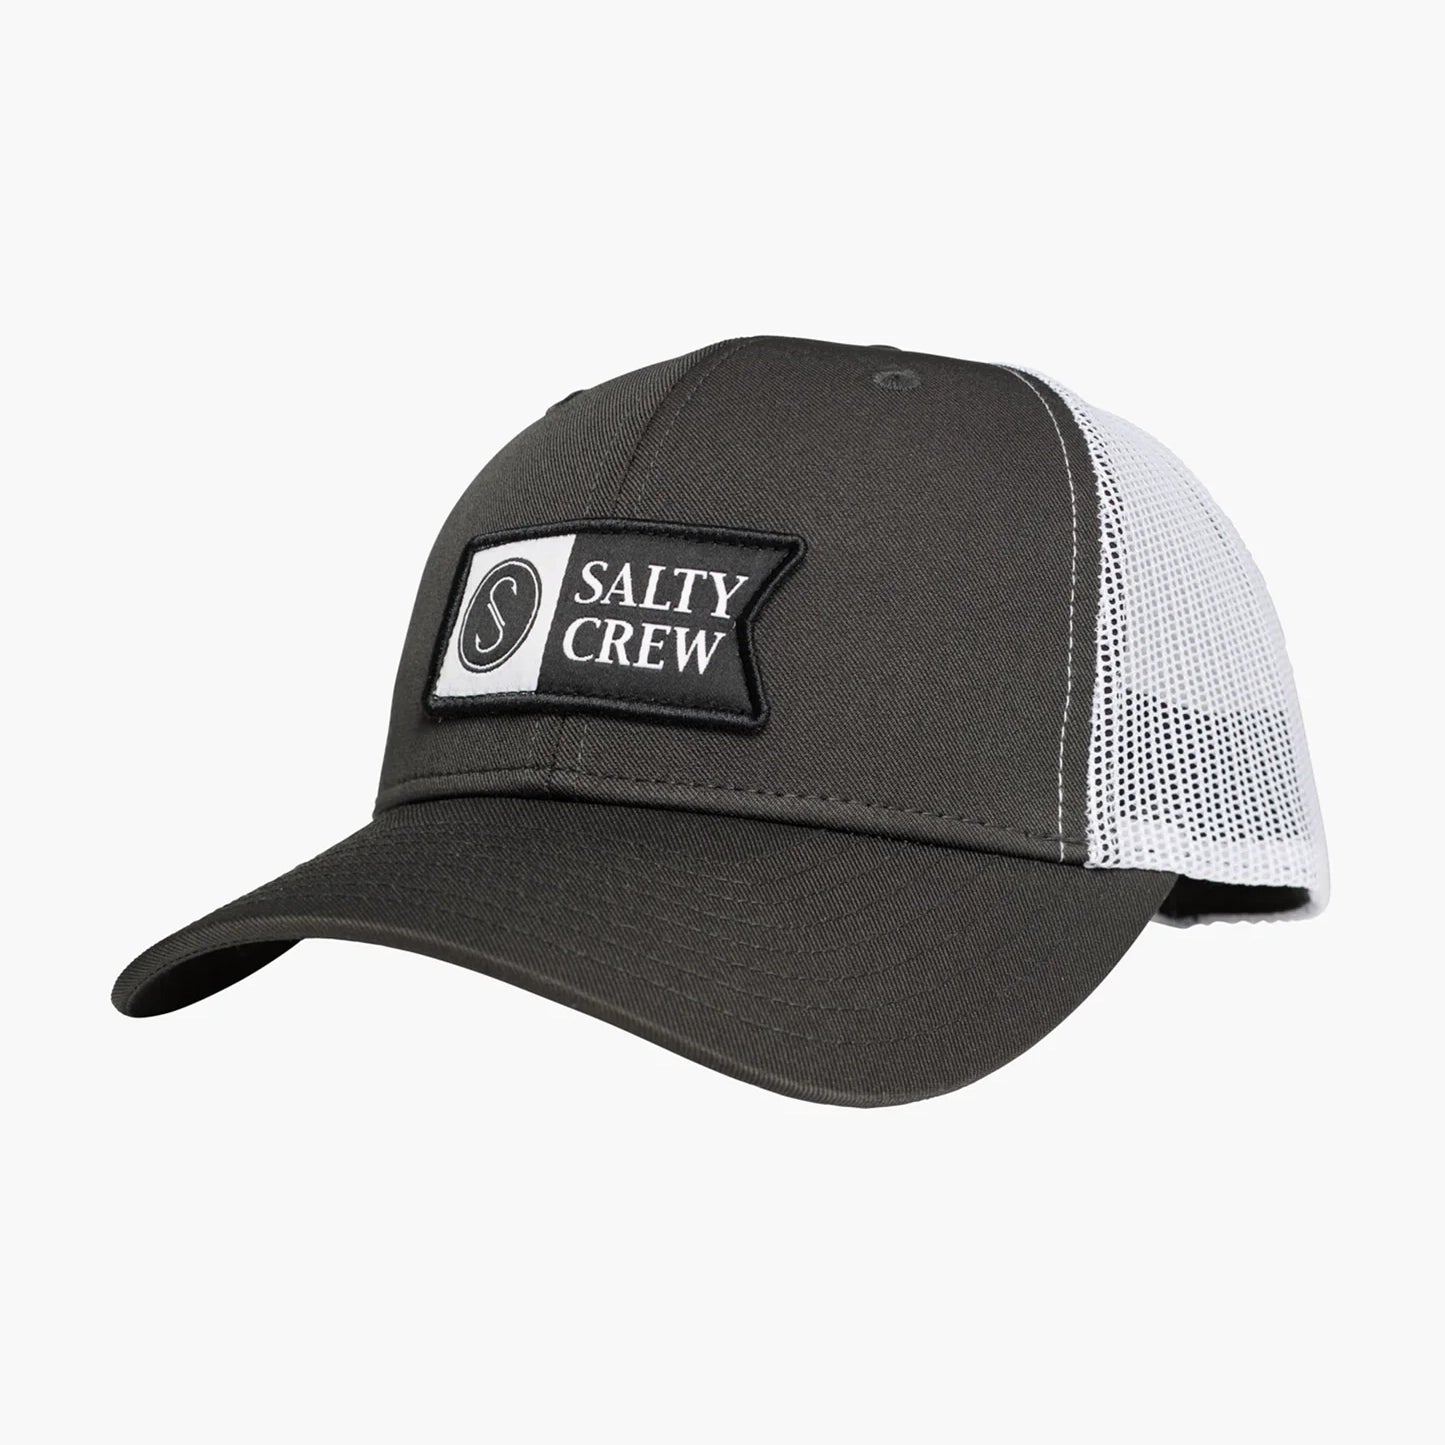 Salty Crew Pinnacle 2 Retro Trucker Hat-Hats & Headwear-Salty Crew-Coal/White-Fishing Station